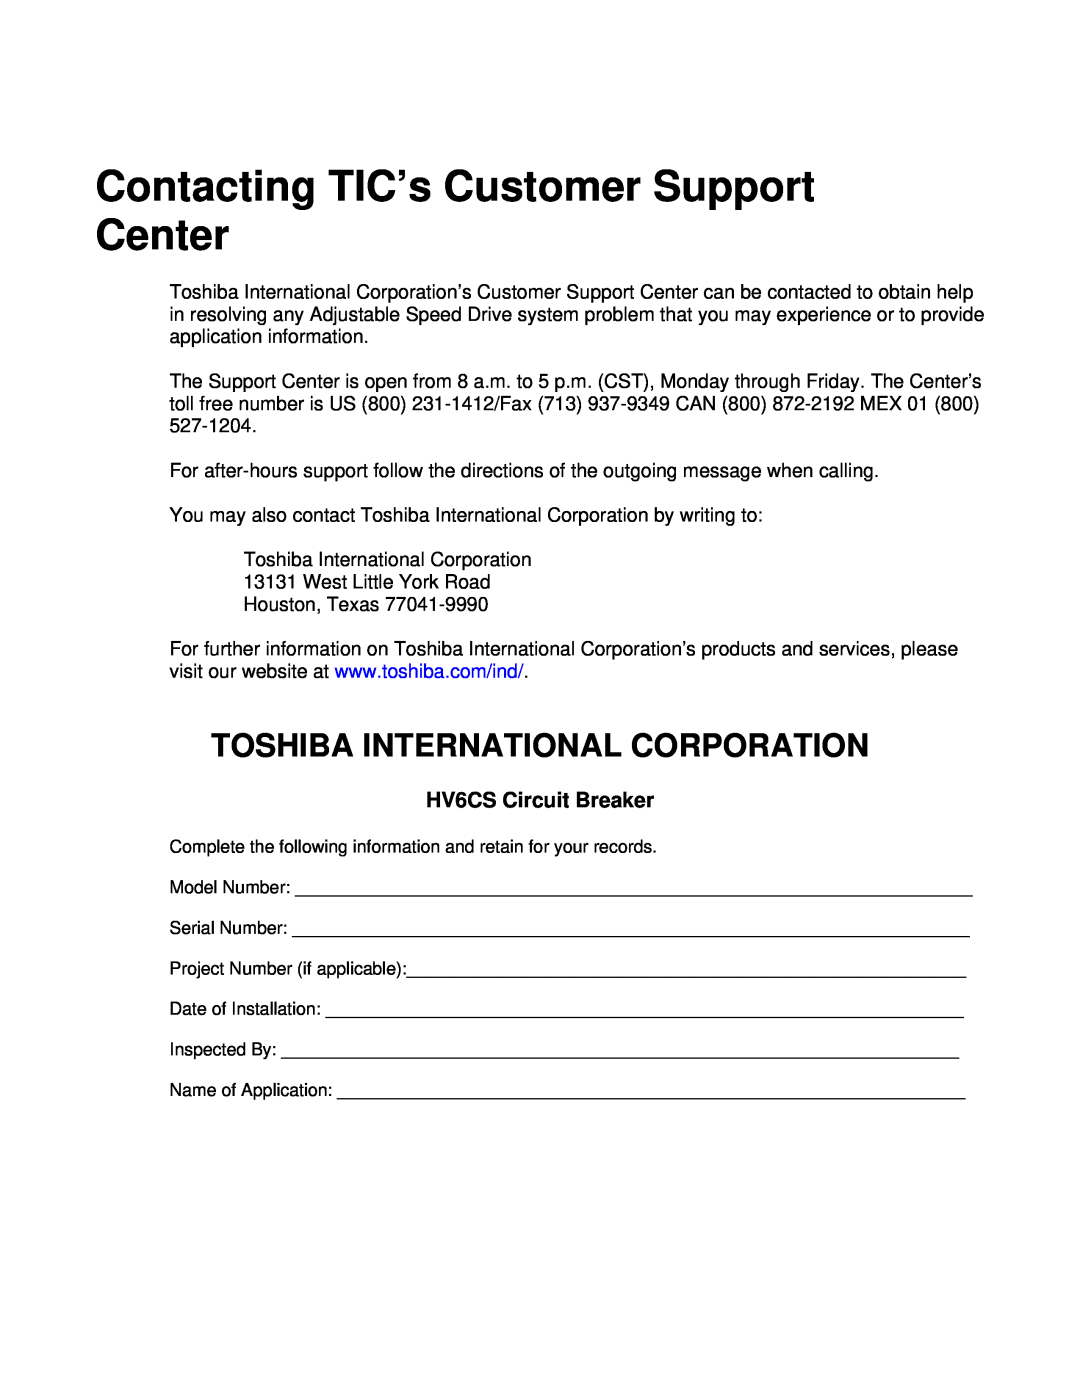 Toshiba H6A-HLS Contacting TIC’s Customer Support Center, Toshiba International Corporation, HV6CS Circuit Breaker 